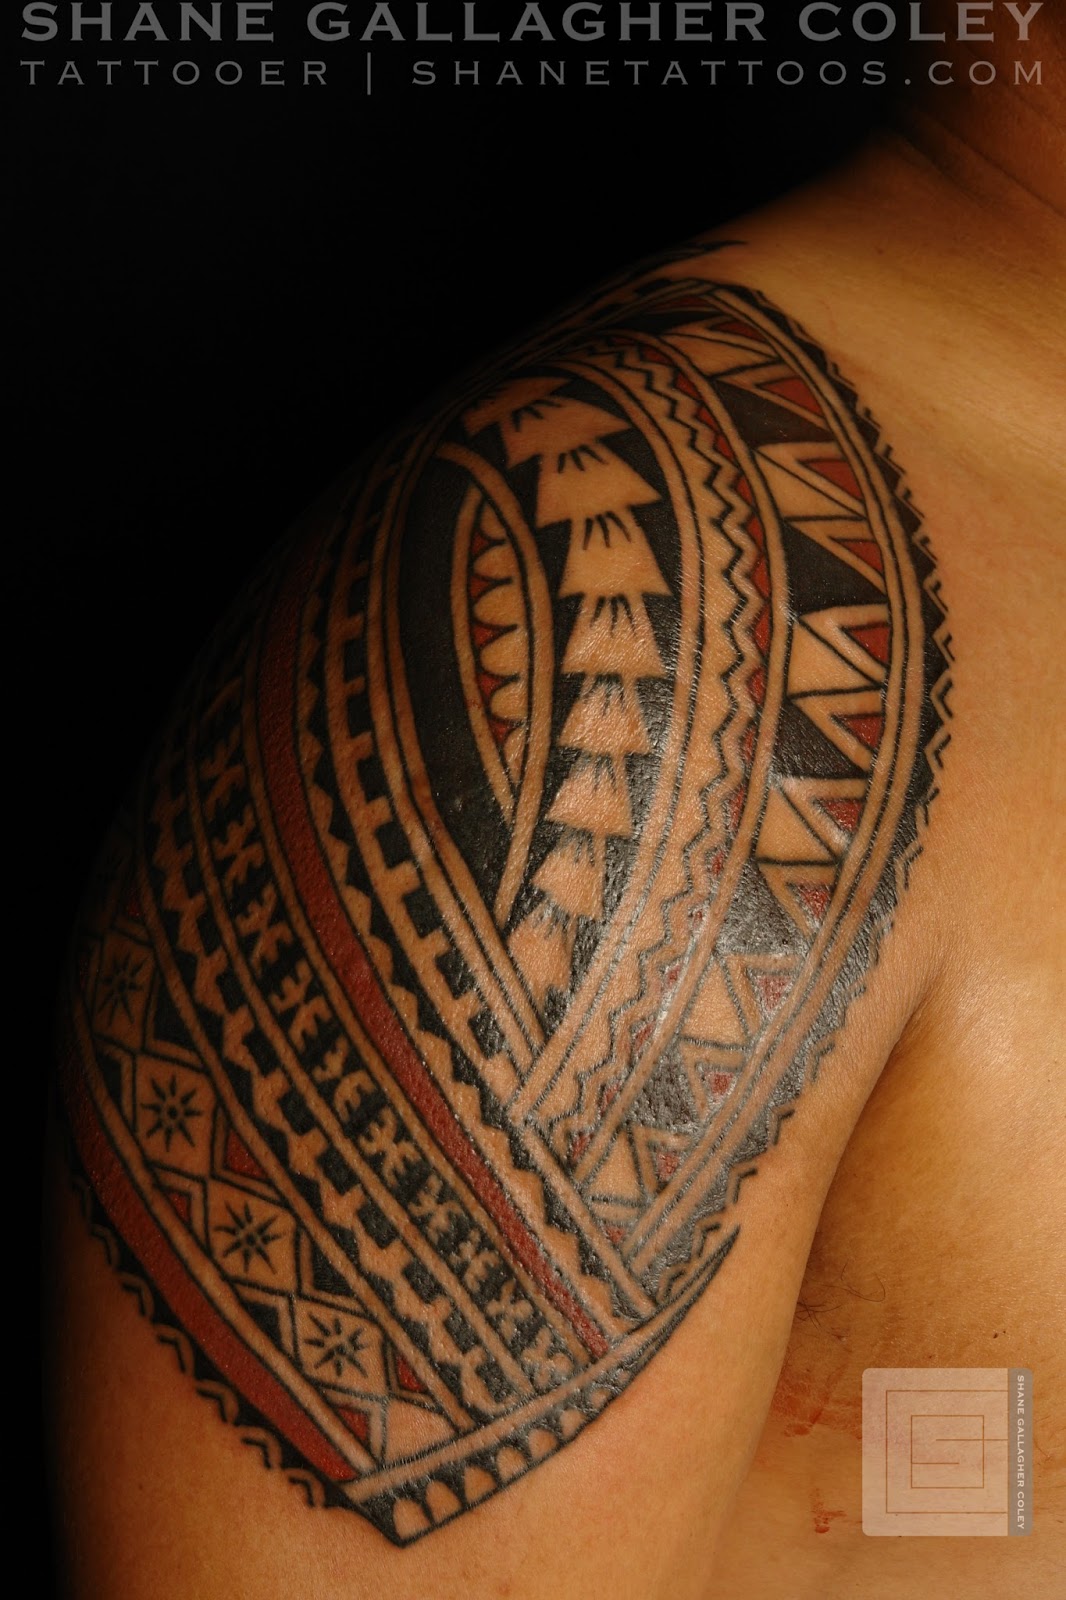 SHANE TATTOOS: Polynesian Shoulder Tattoo